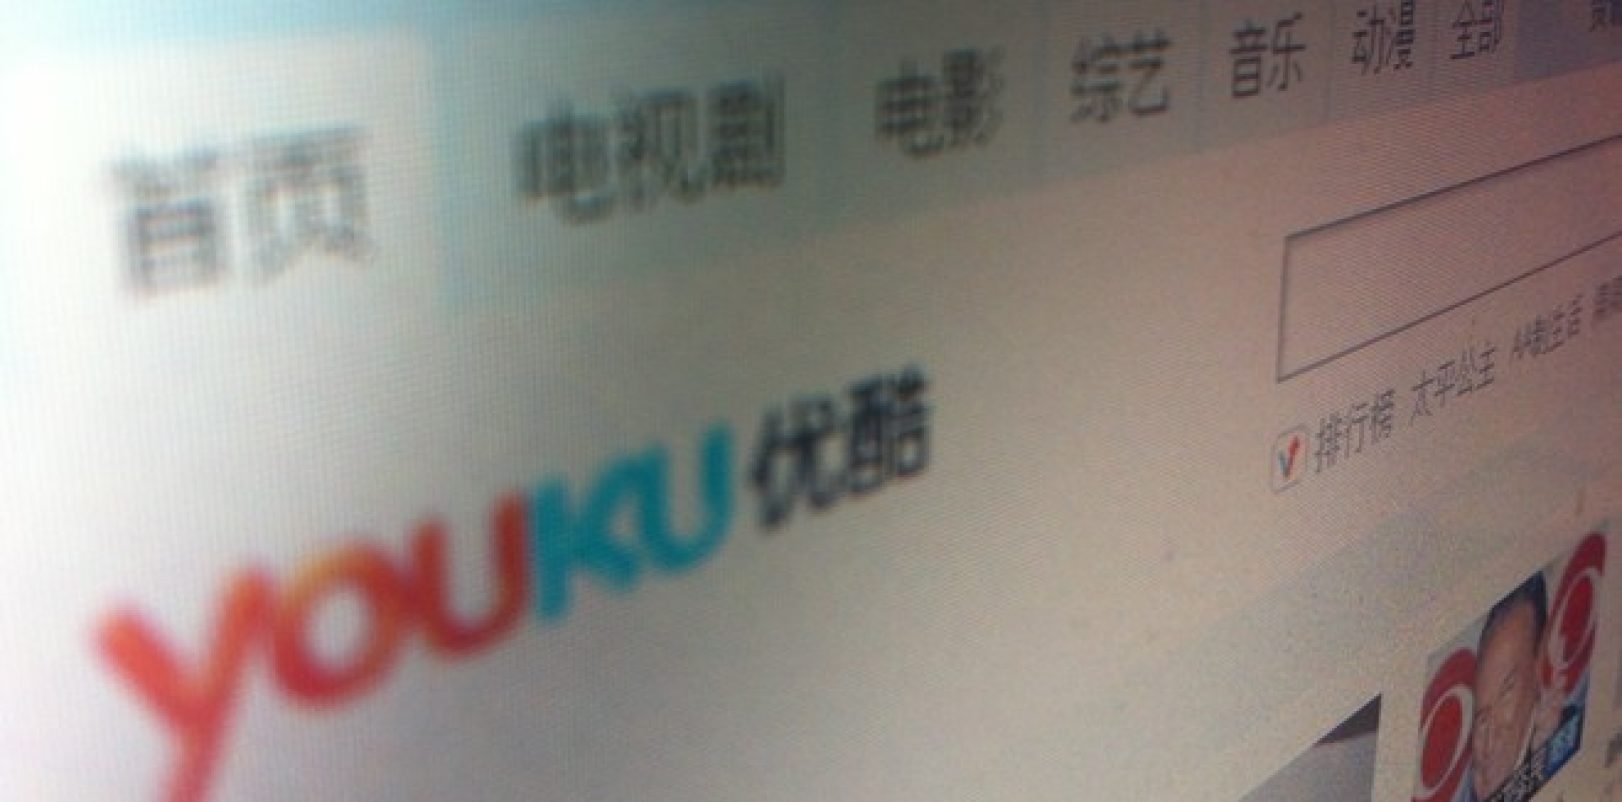 free china vpn youku